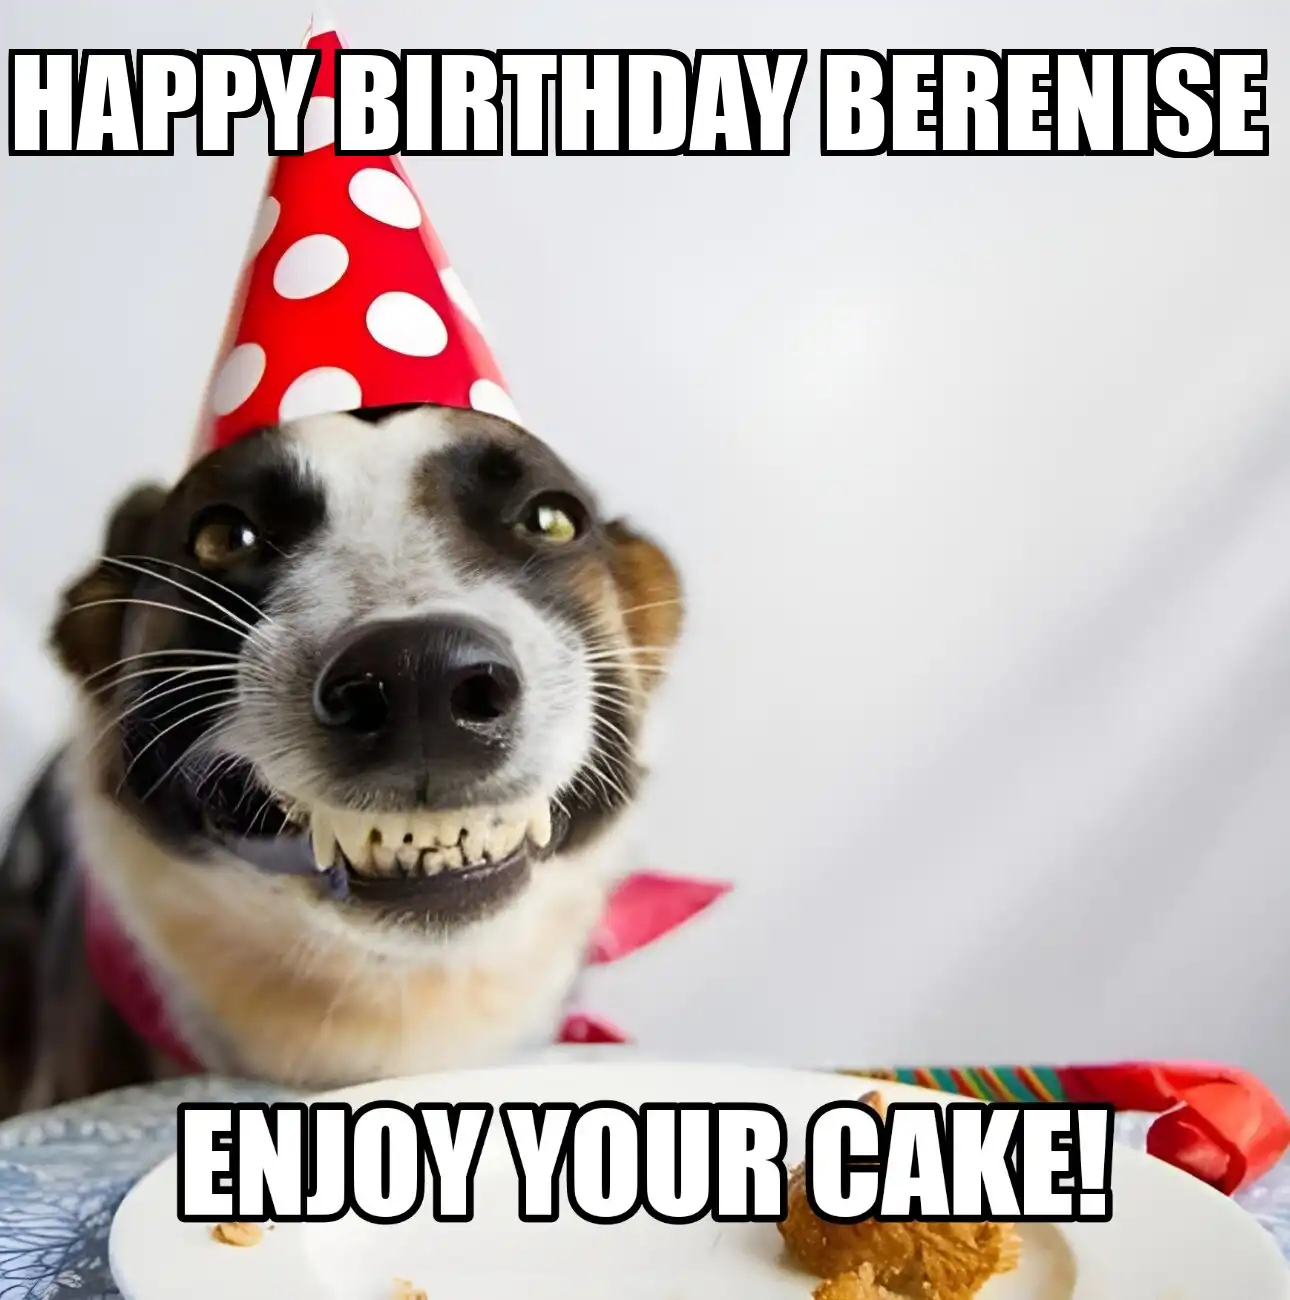 Happy Birthday Berenise Enjoy Your Cake Dog Meme